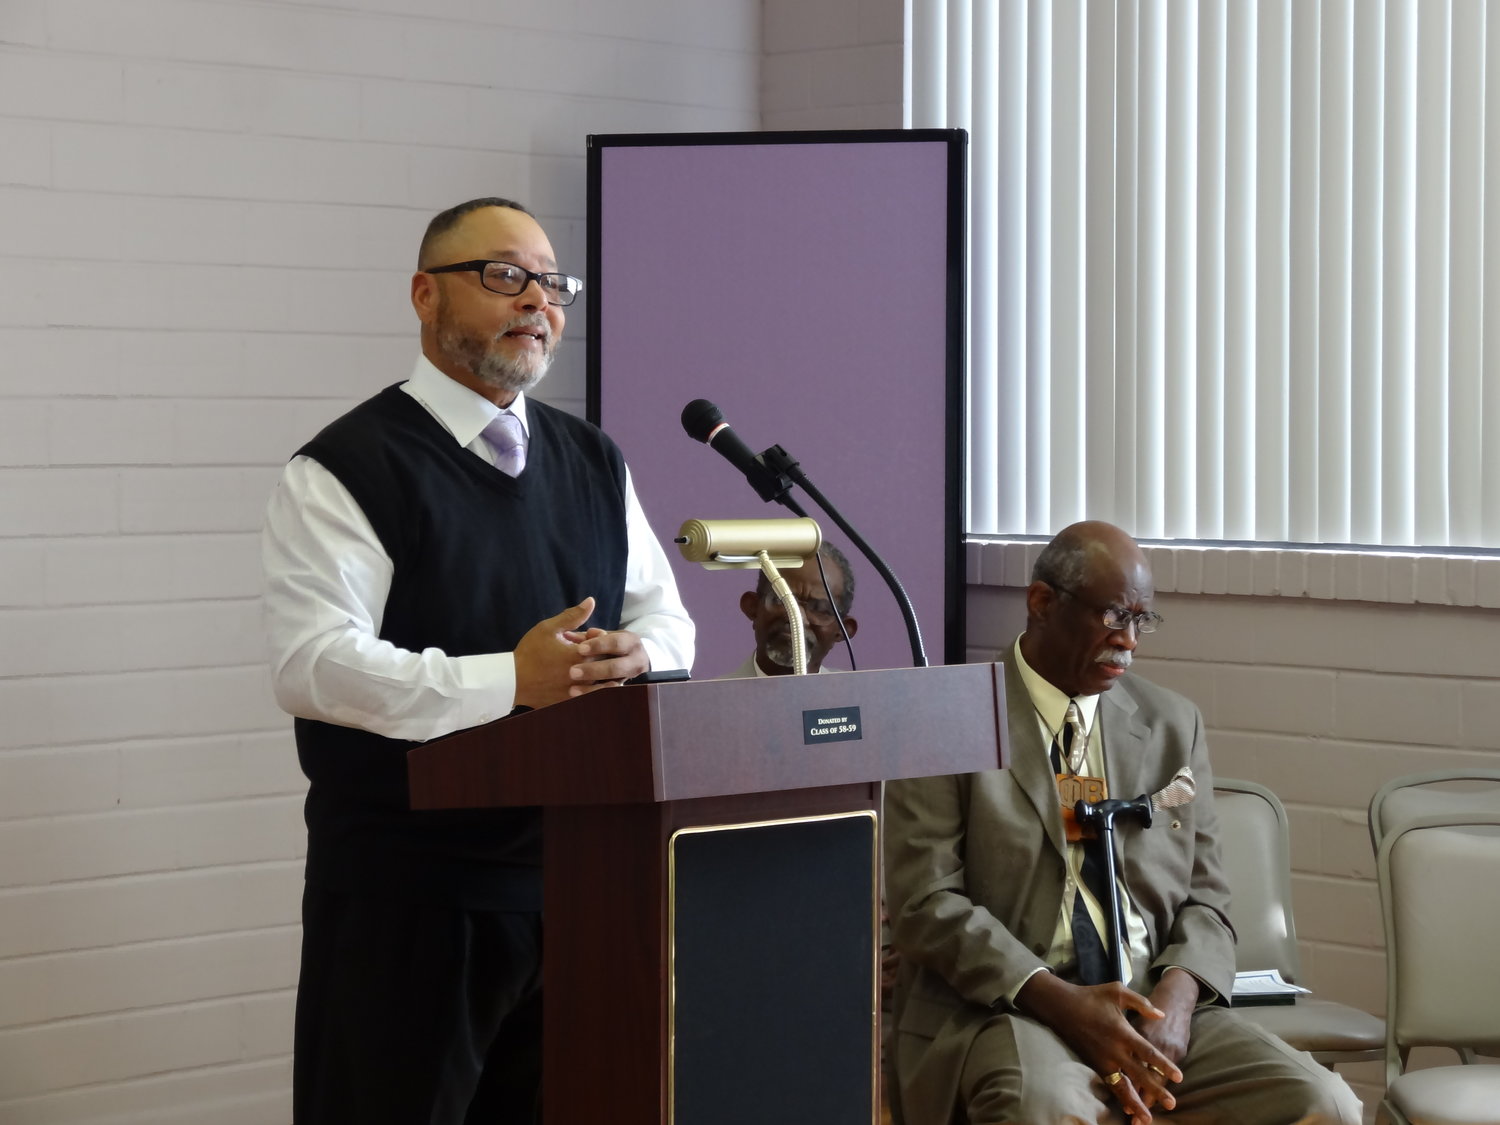 Carlist Brinkley speaks at the Black History Month program in Mineola. (Monitor photo by Amanda Duncan)